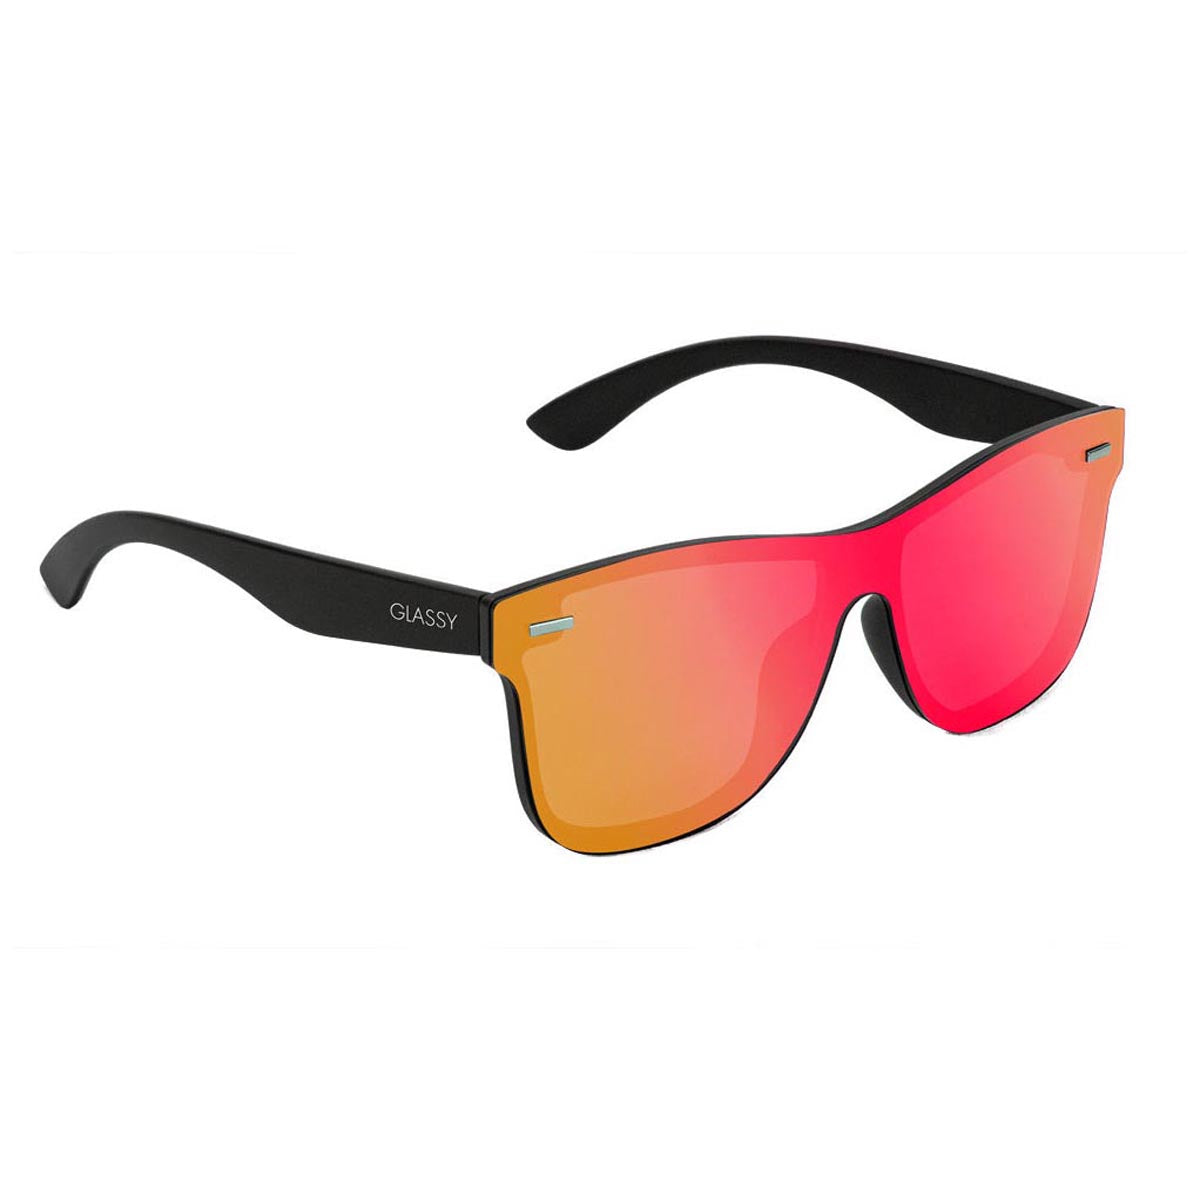 Glassy Leo Premium Sunglasses - Matte Black/Red Mirror image 1